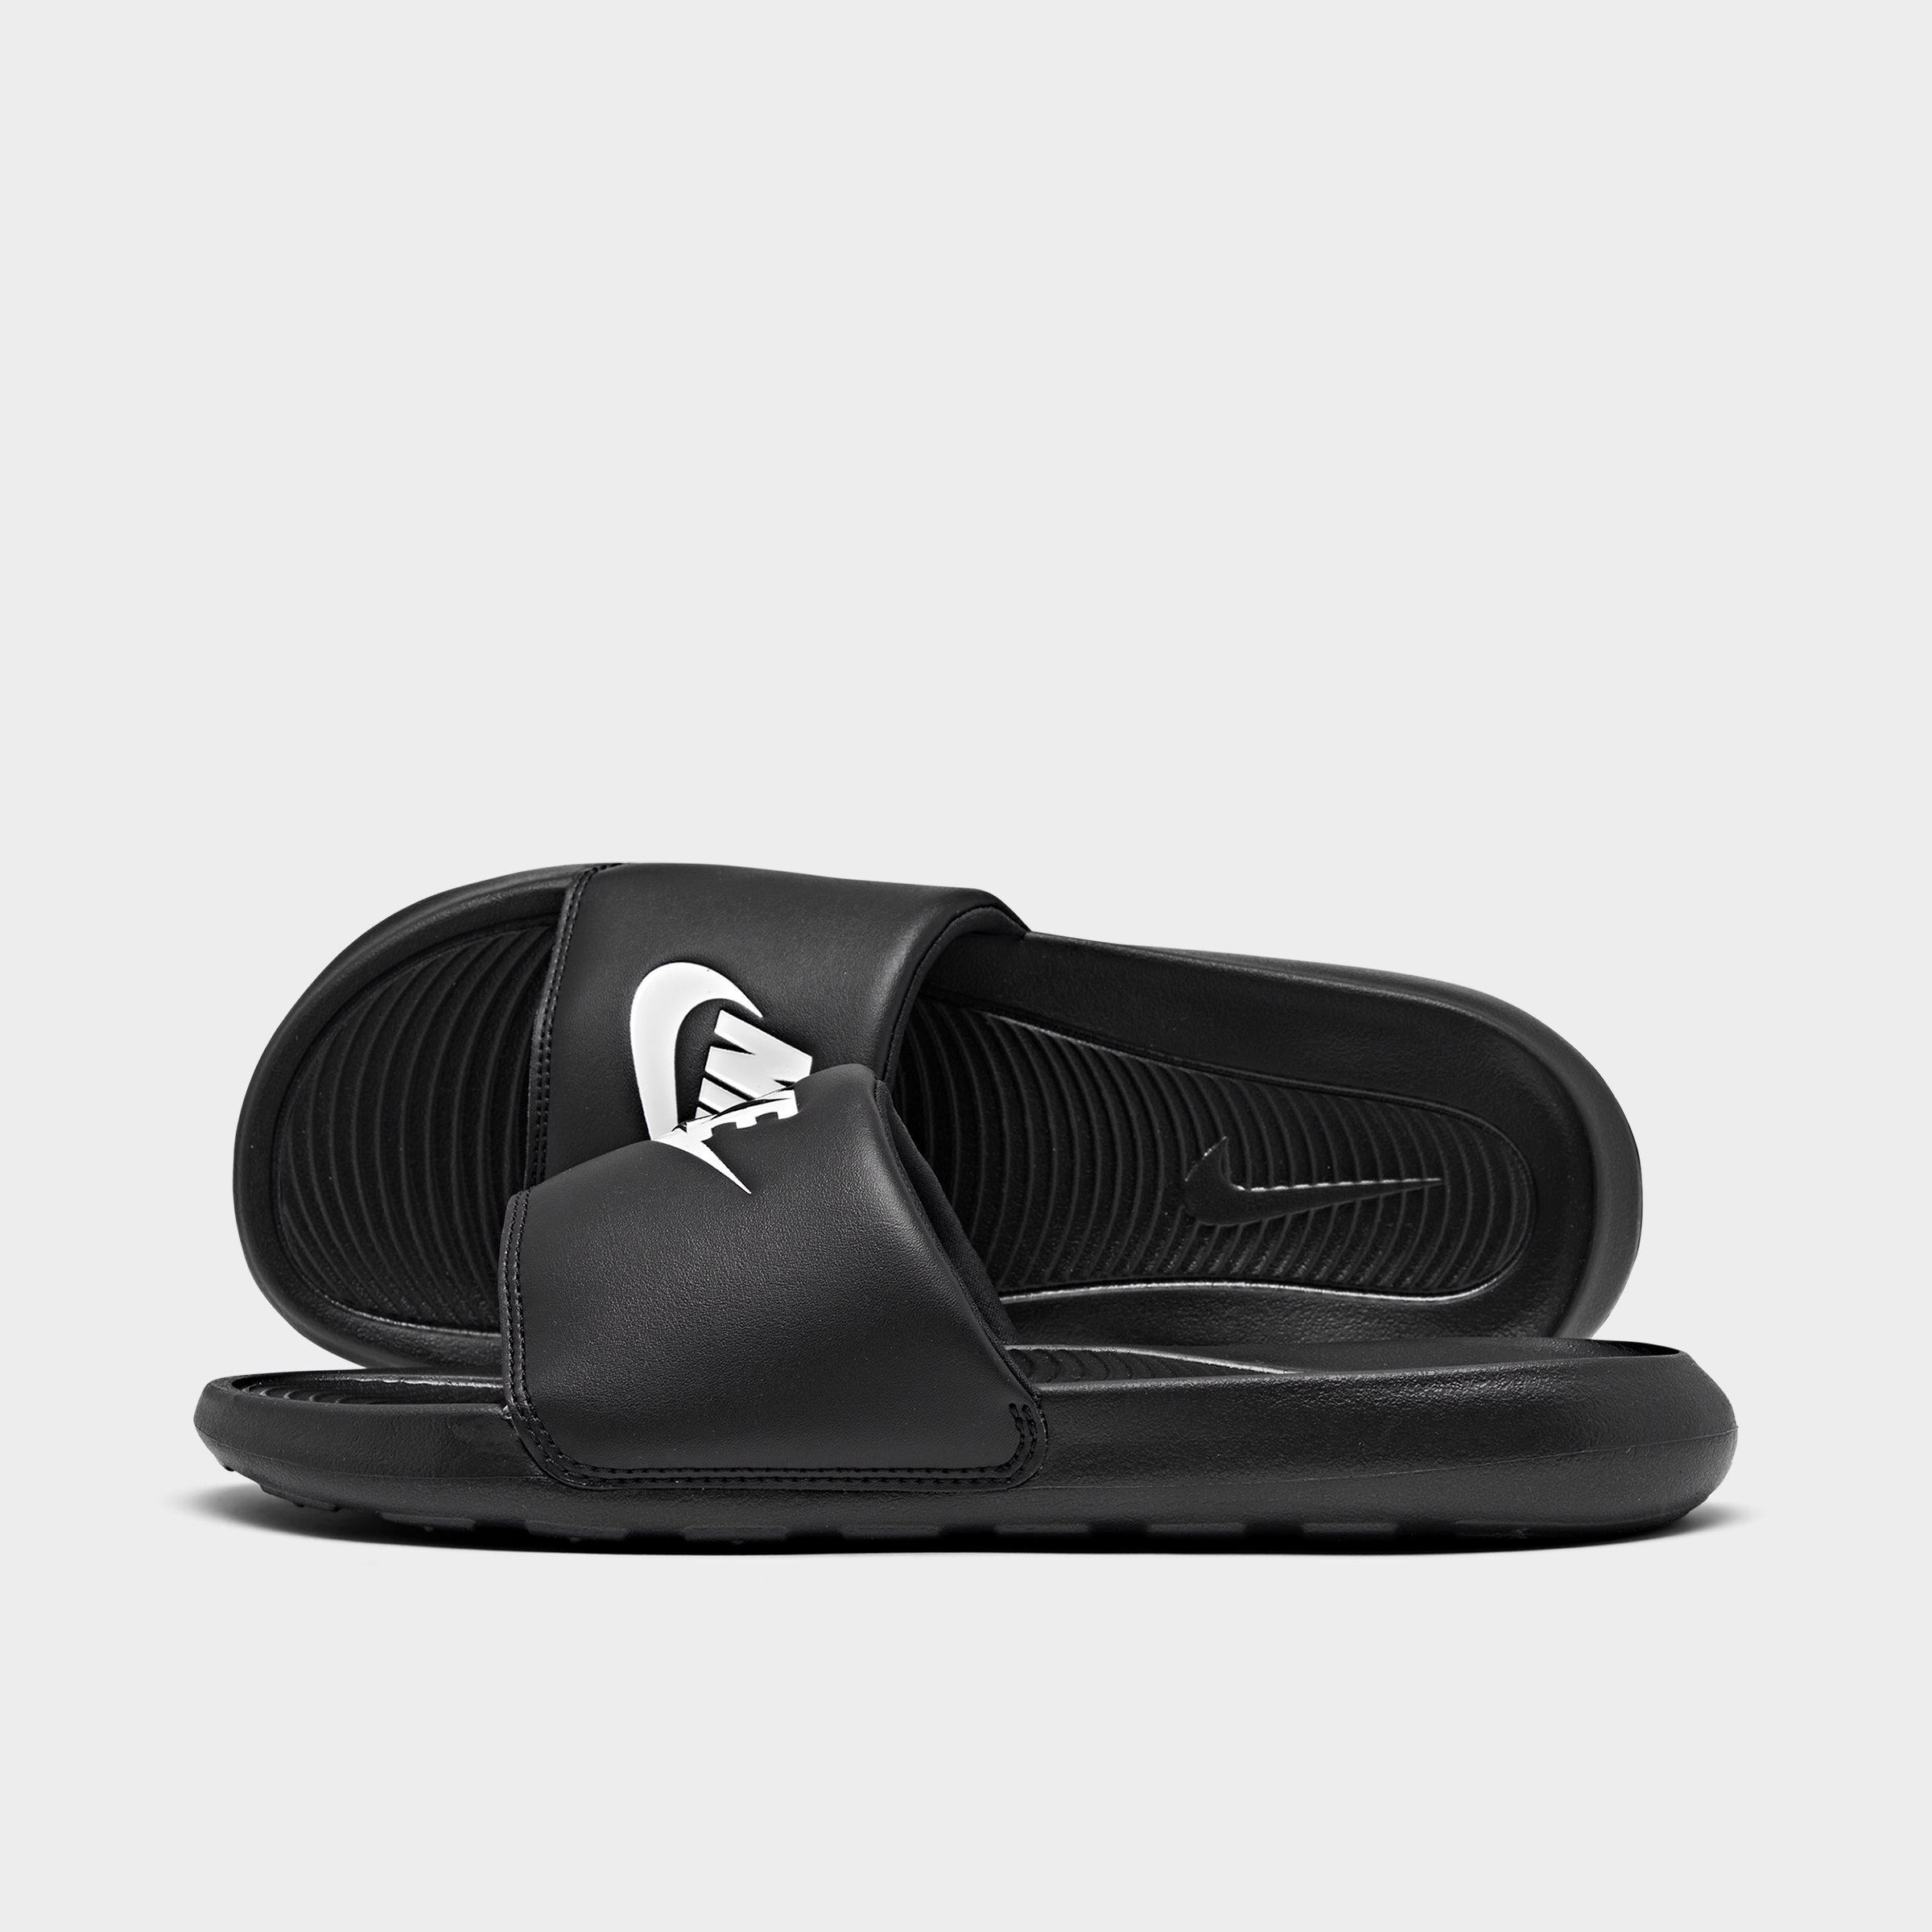 jd sports adidas slippers